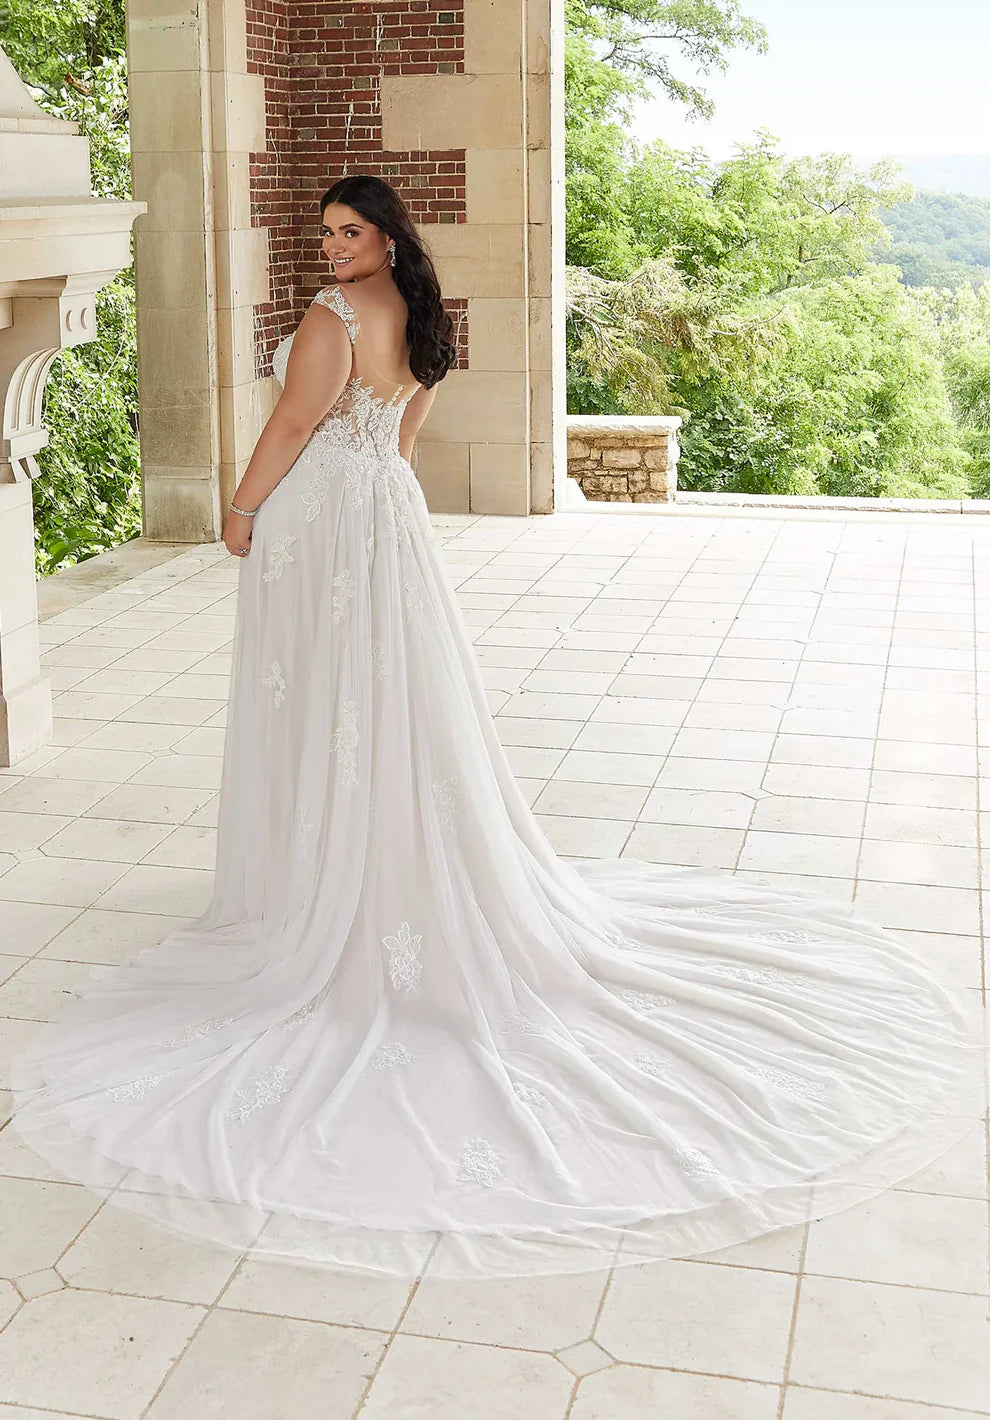 Boho Plus Size Wedding Dresses Scoop Neck Cap Sleeves A-Line Tulle White/Ivory Bridal Gowns vestidos de novia